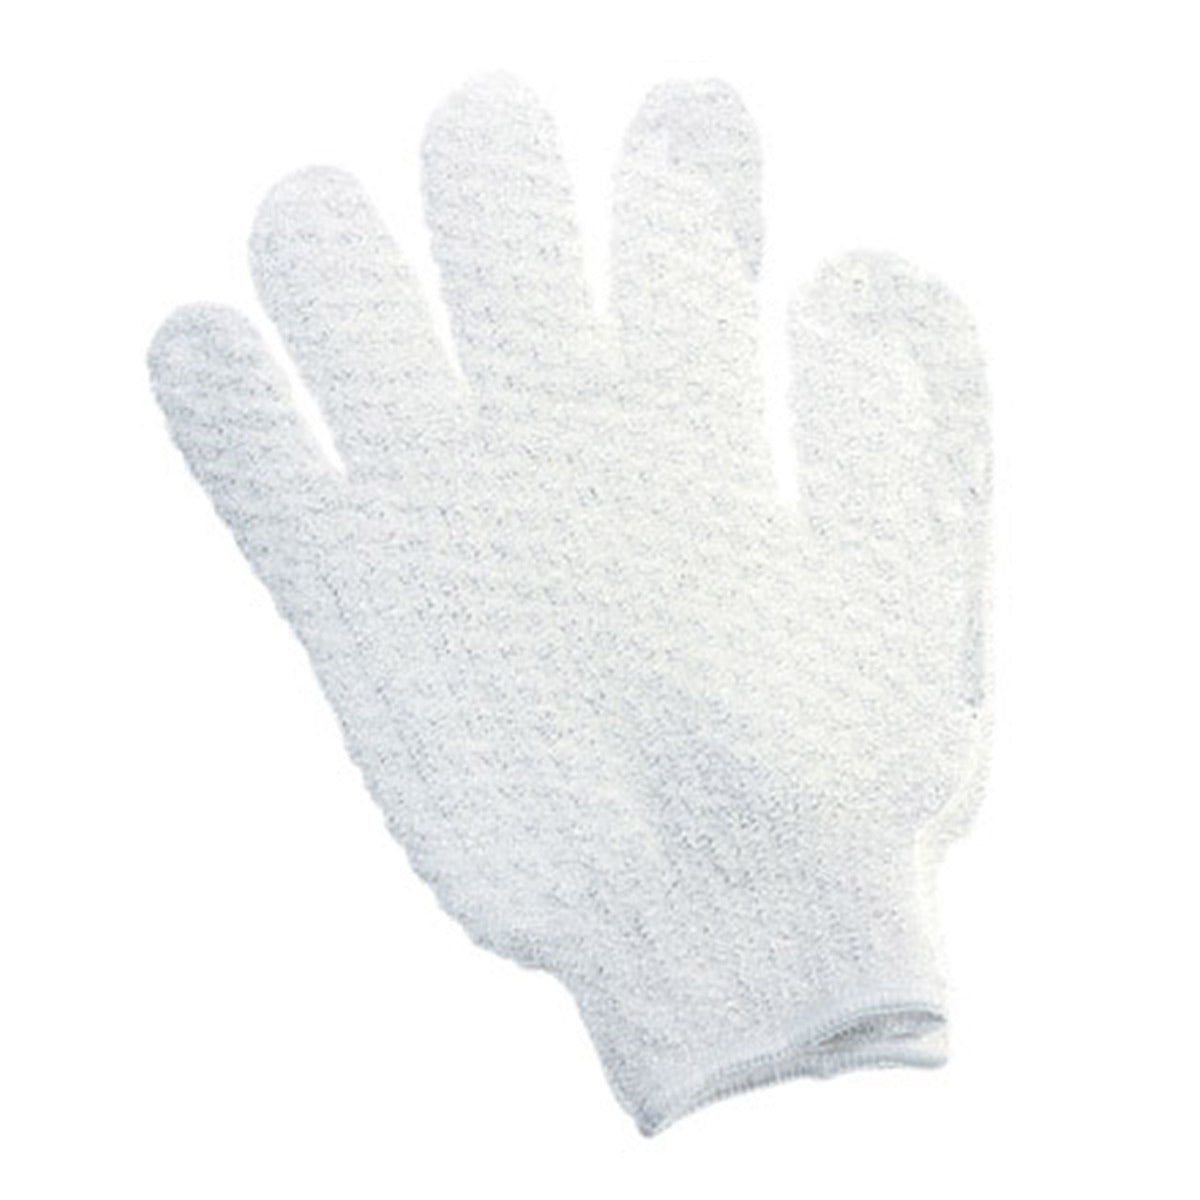 Primary image of Exfoliating Hydro Gloves - White